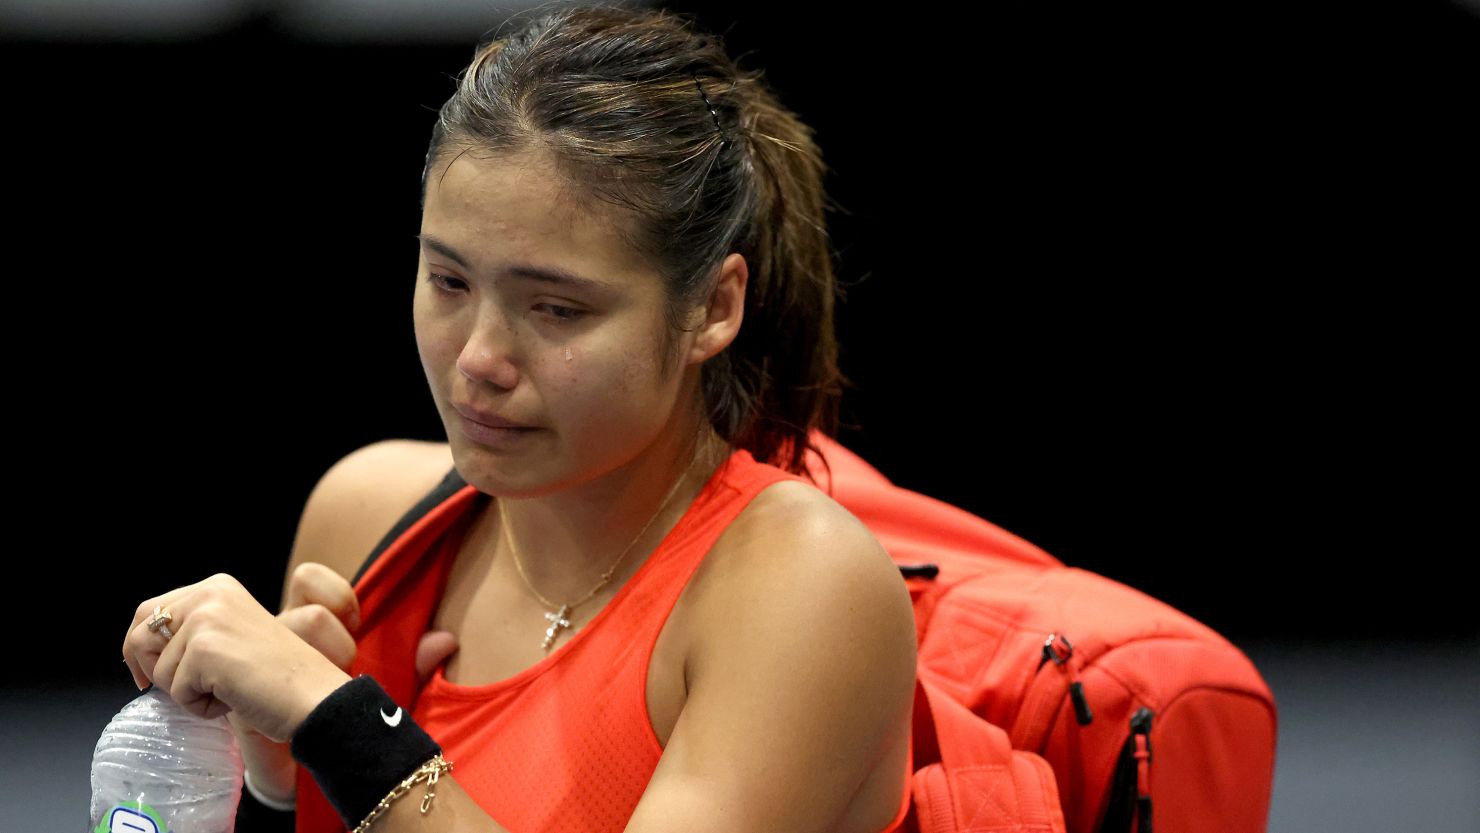 Emma Raducanu leaves court injured and in tears ahead of Australian